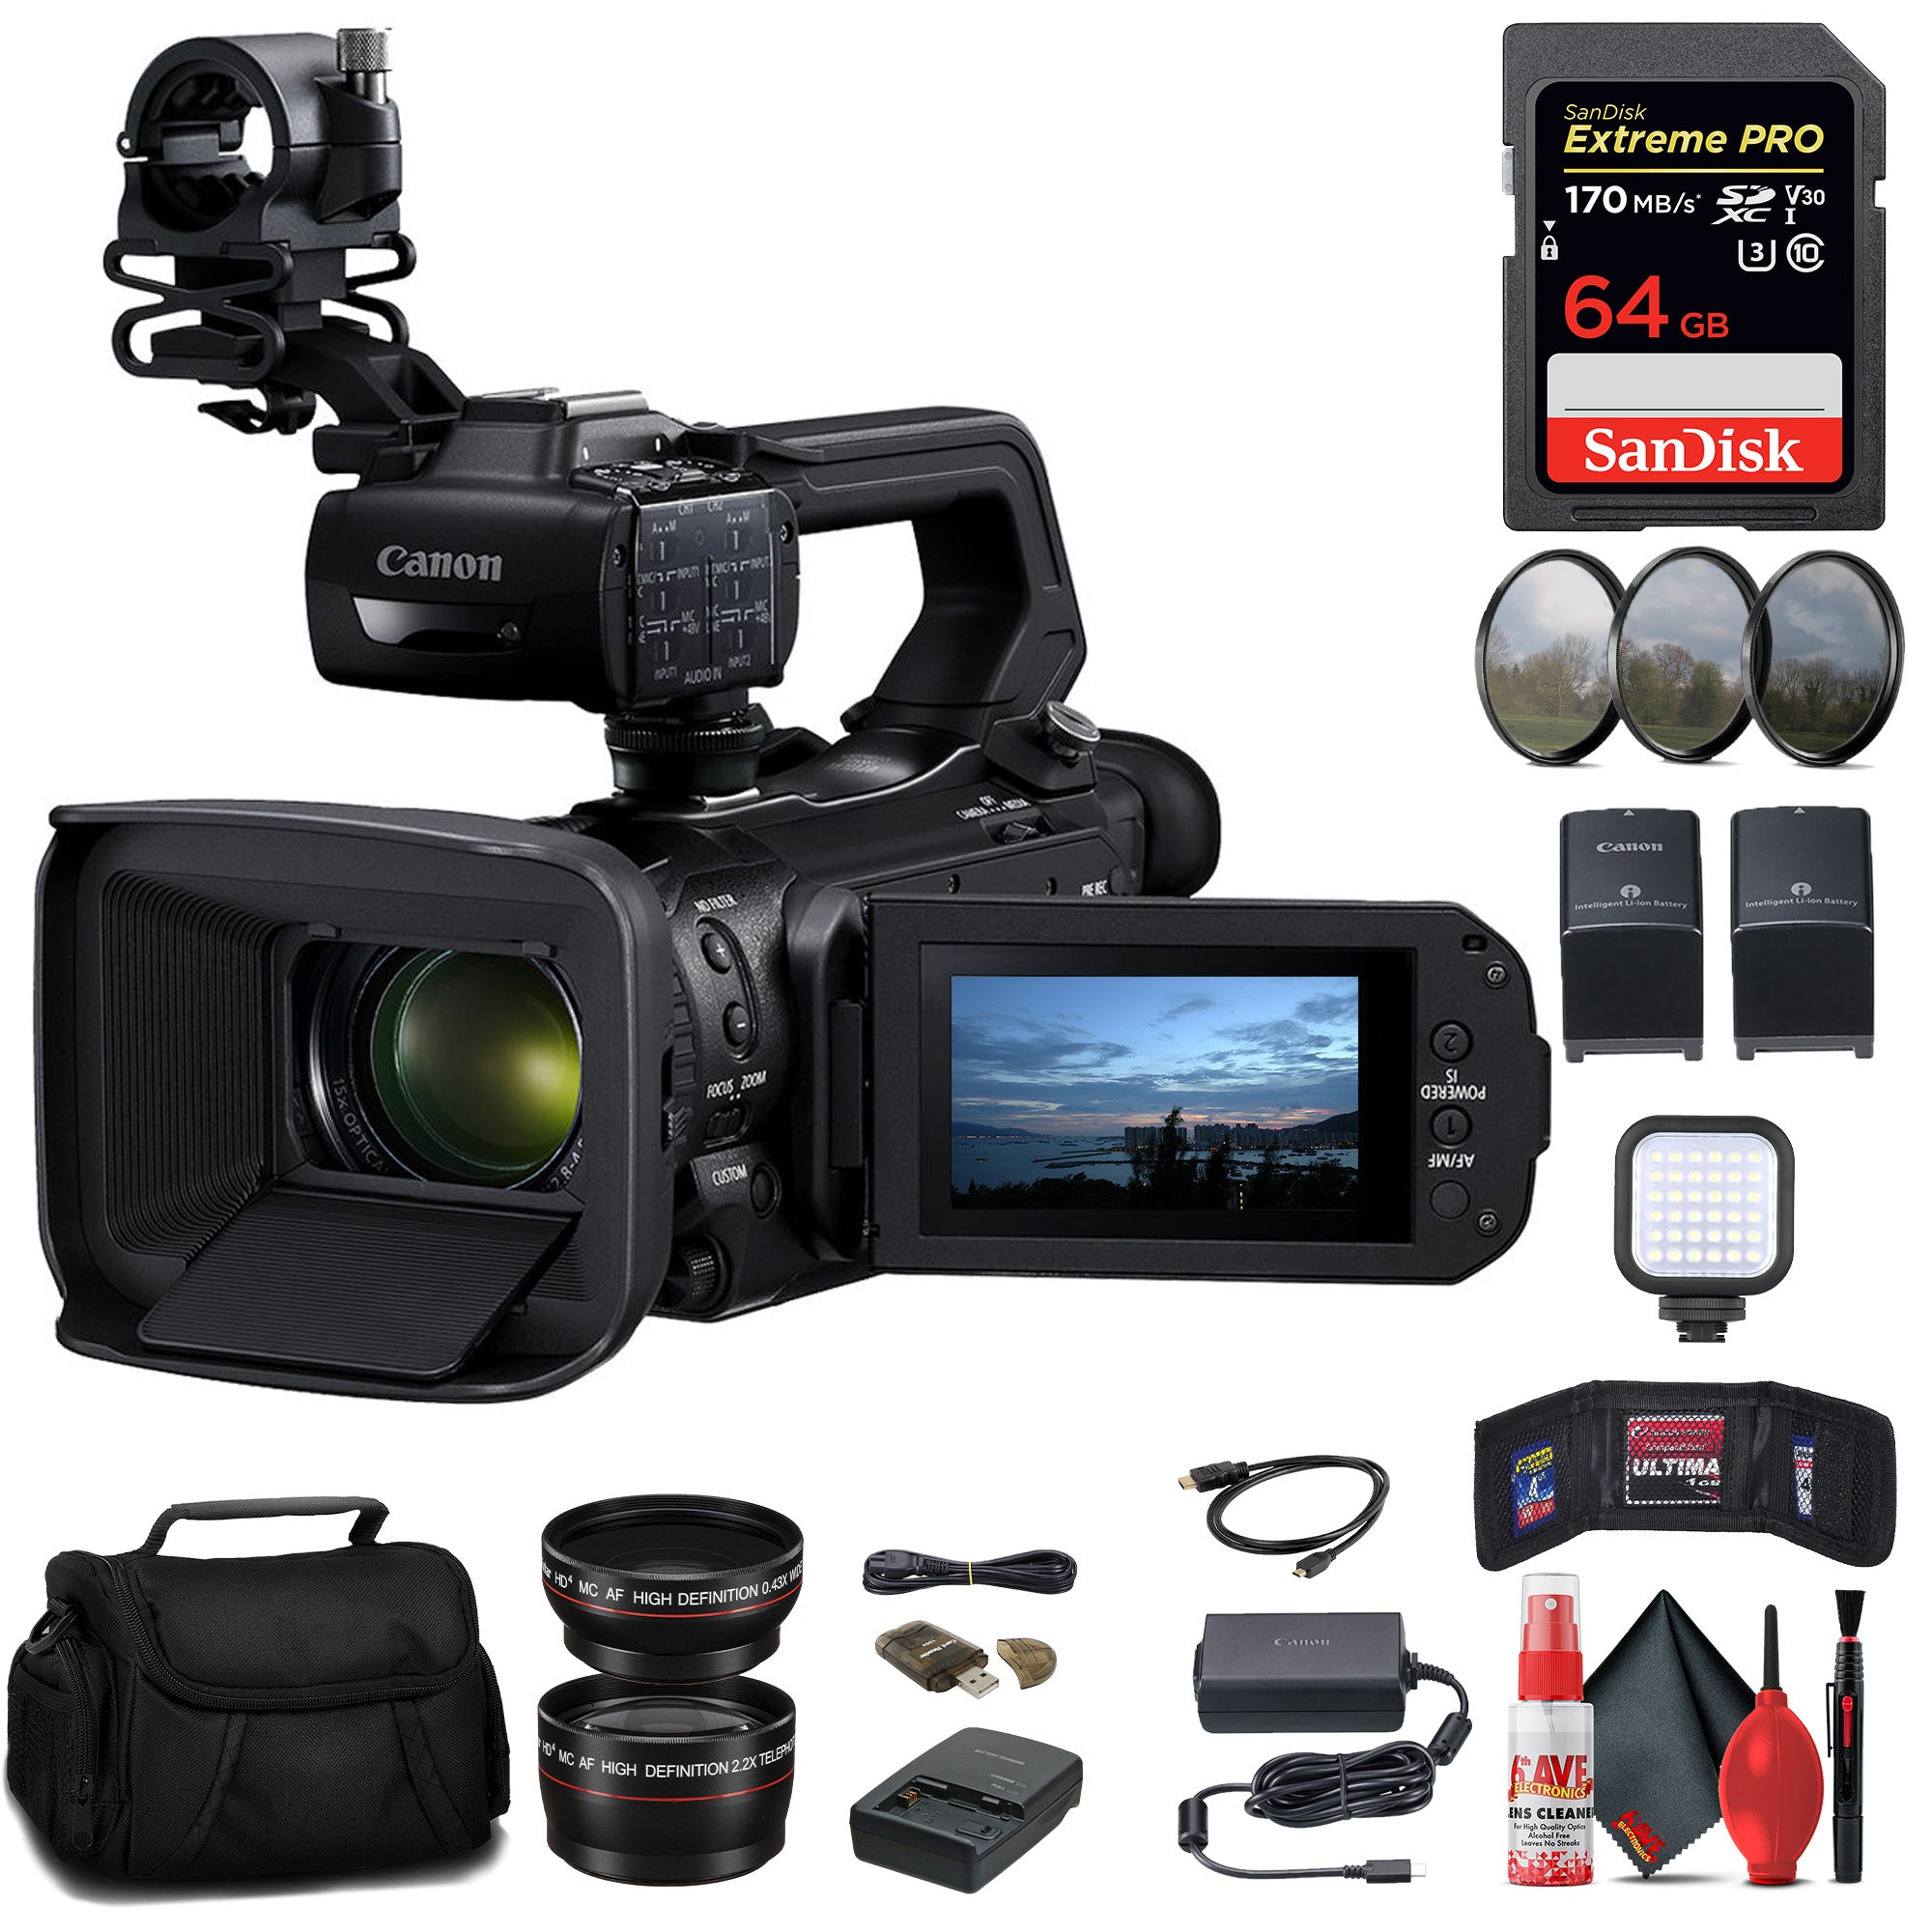 Canon XA70 UHD 4K30 Camcorder with Dual-Pixel Autofocus + 64GB Memory Card Starter Bundle